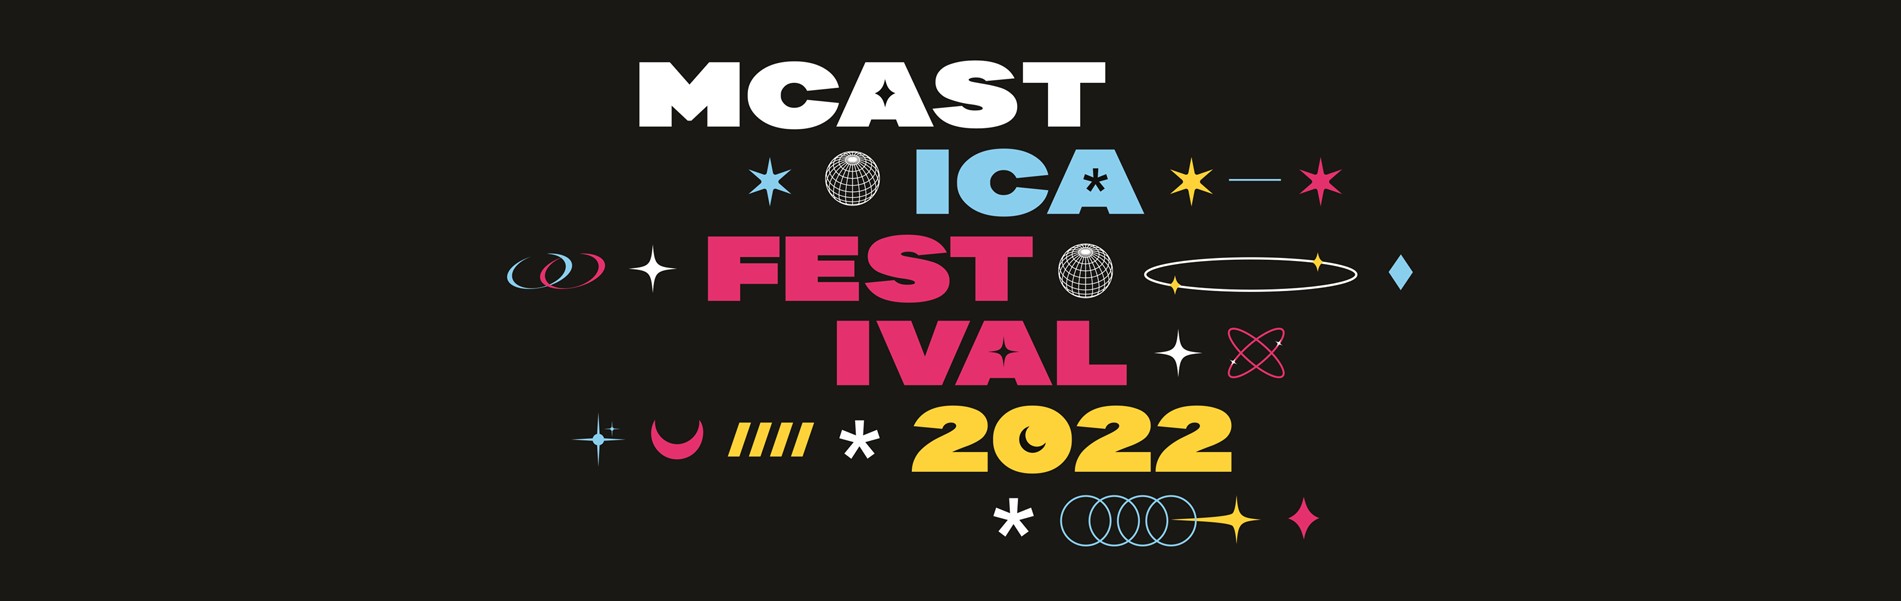 MCAST ICA Festival 2022 - MCAST Banner